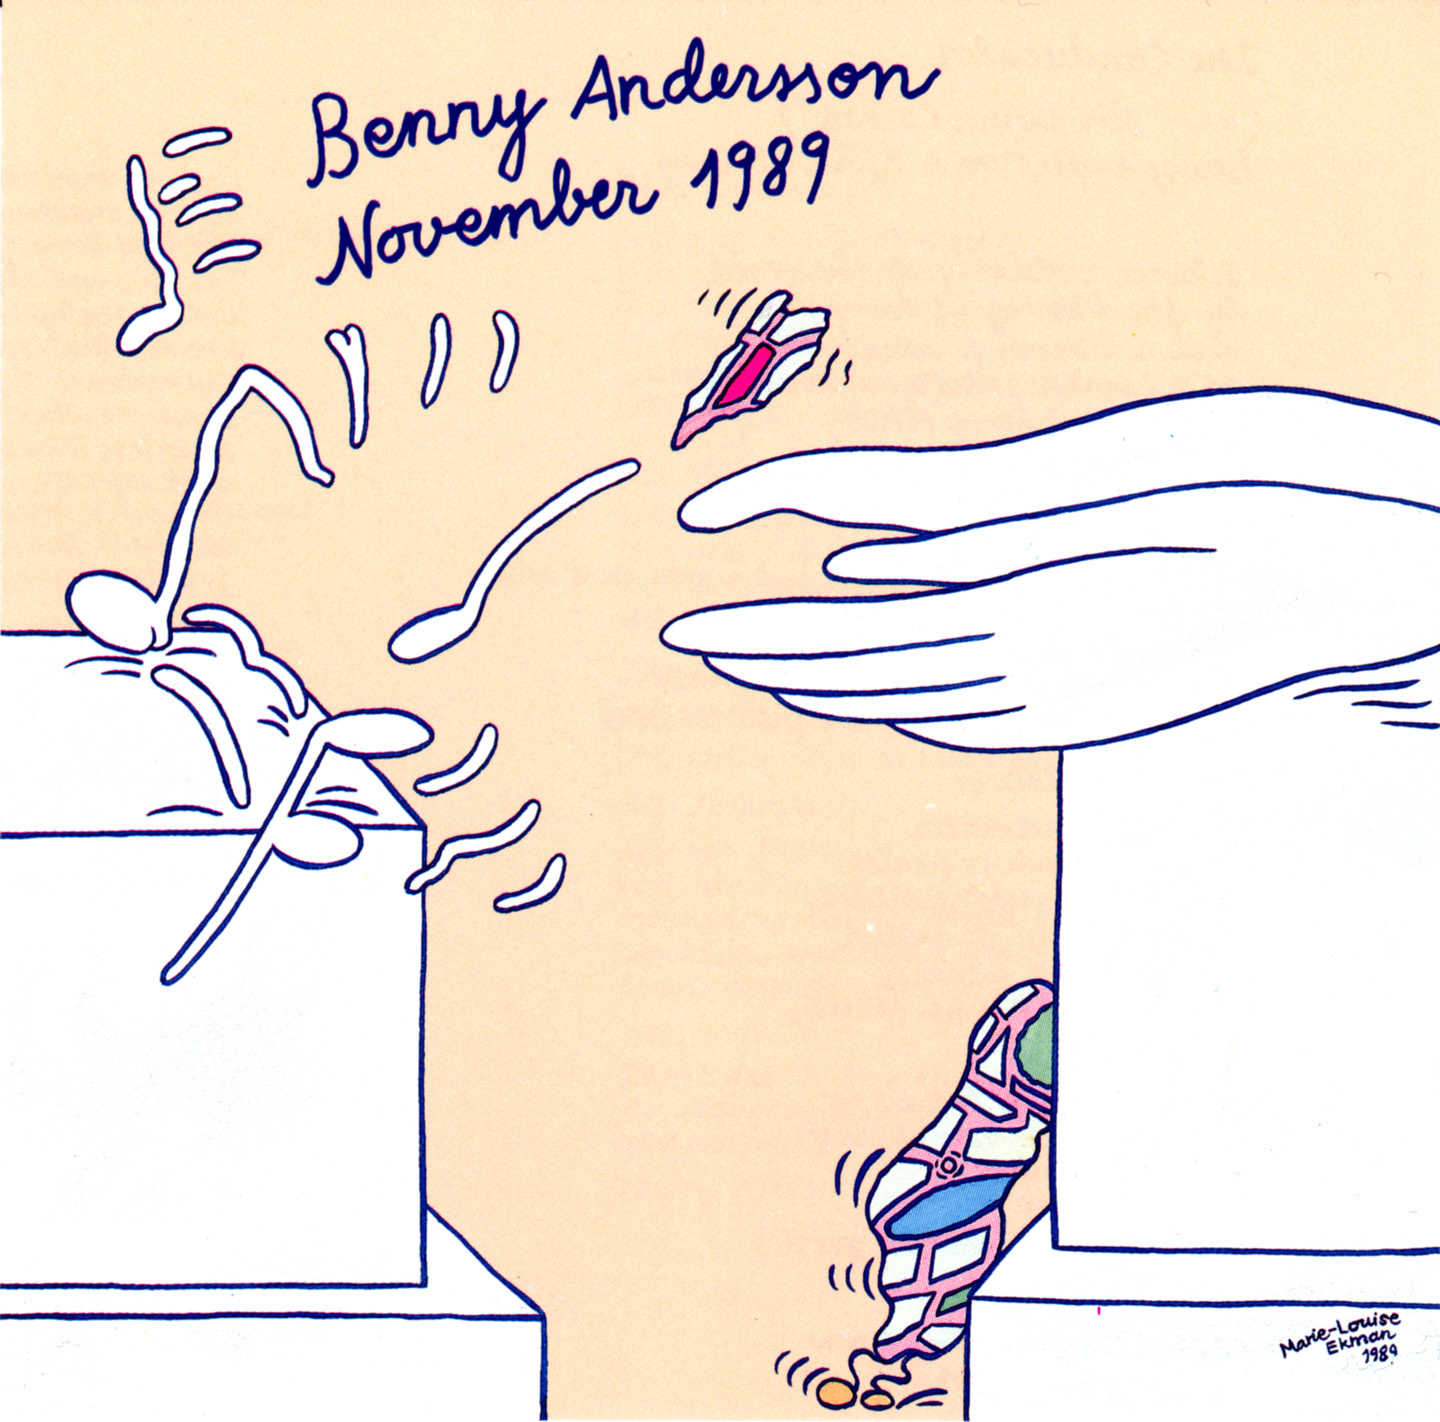 Benny Andersson - November 1989 - CD